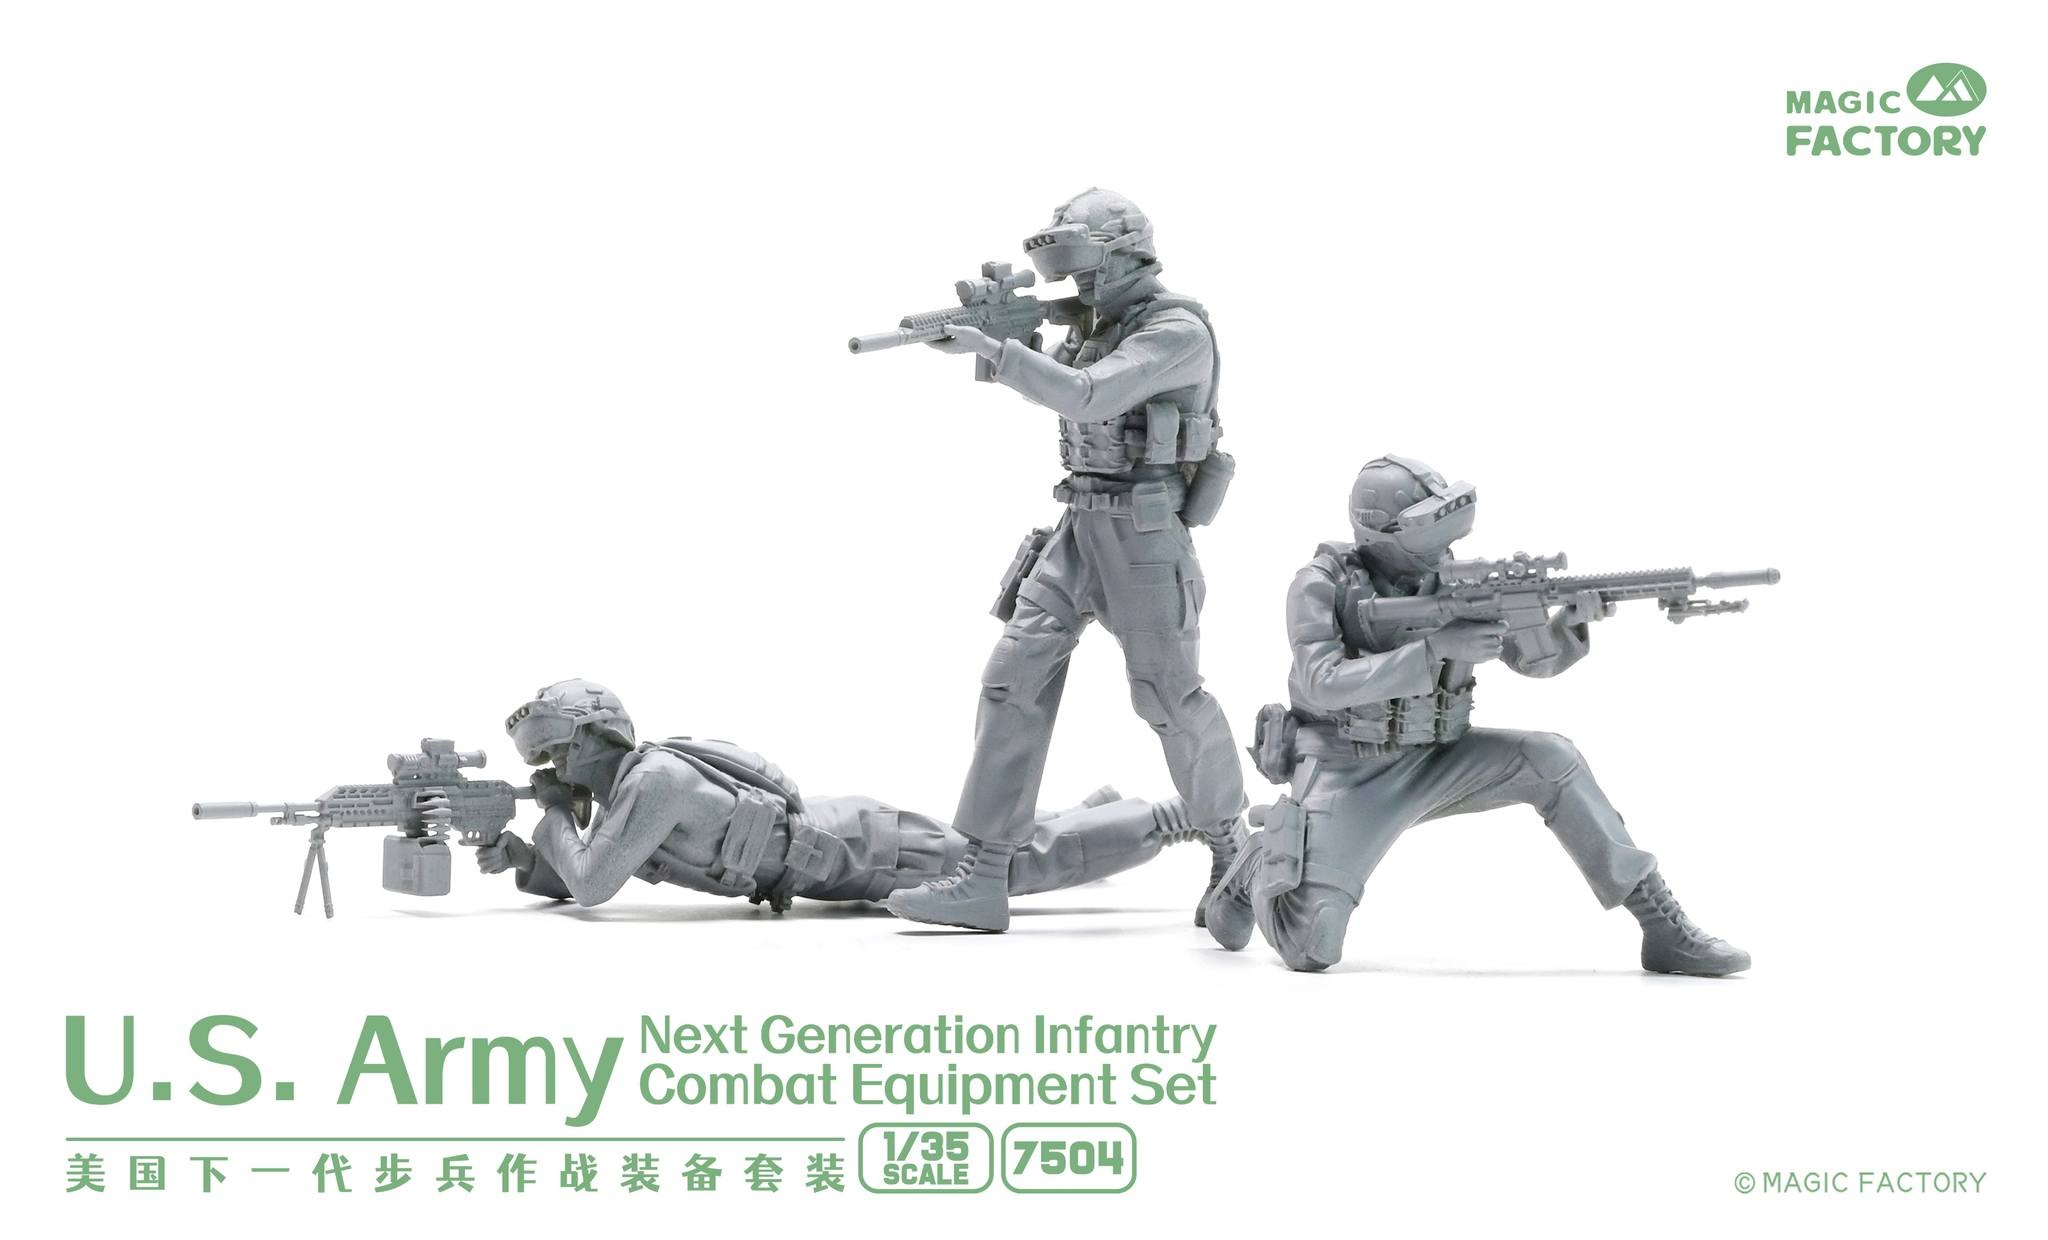 7504  фигуры  U.S Army Next Generation Infantry Equipment Set  (1:35)